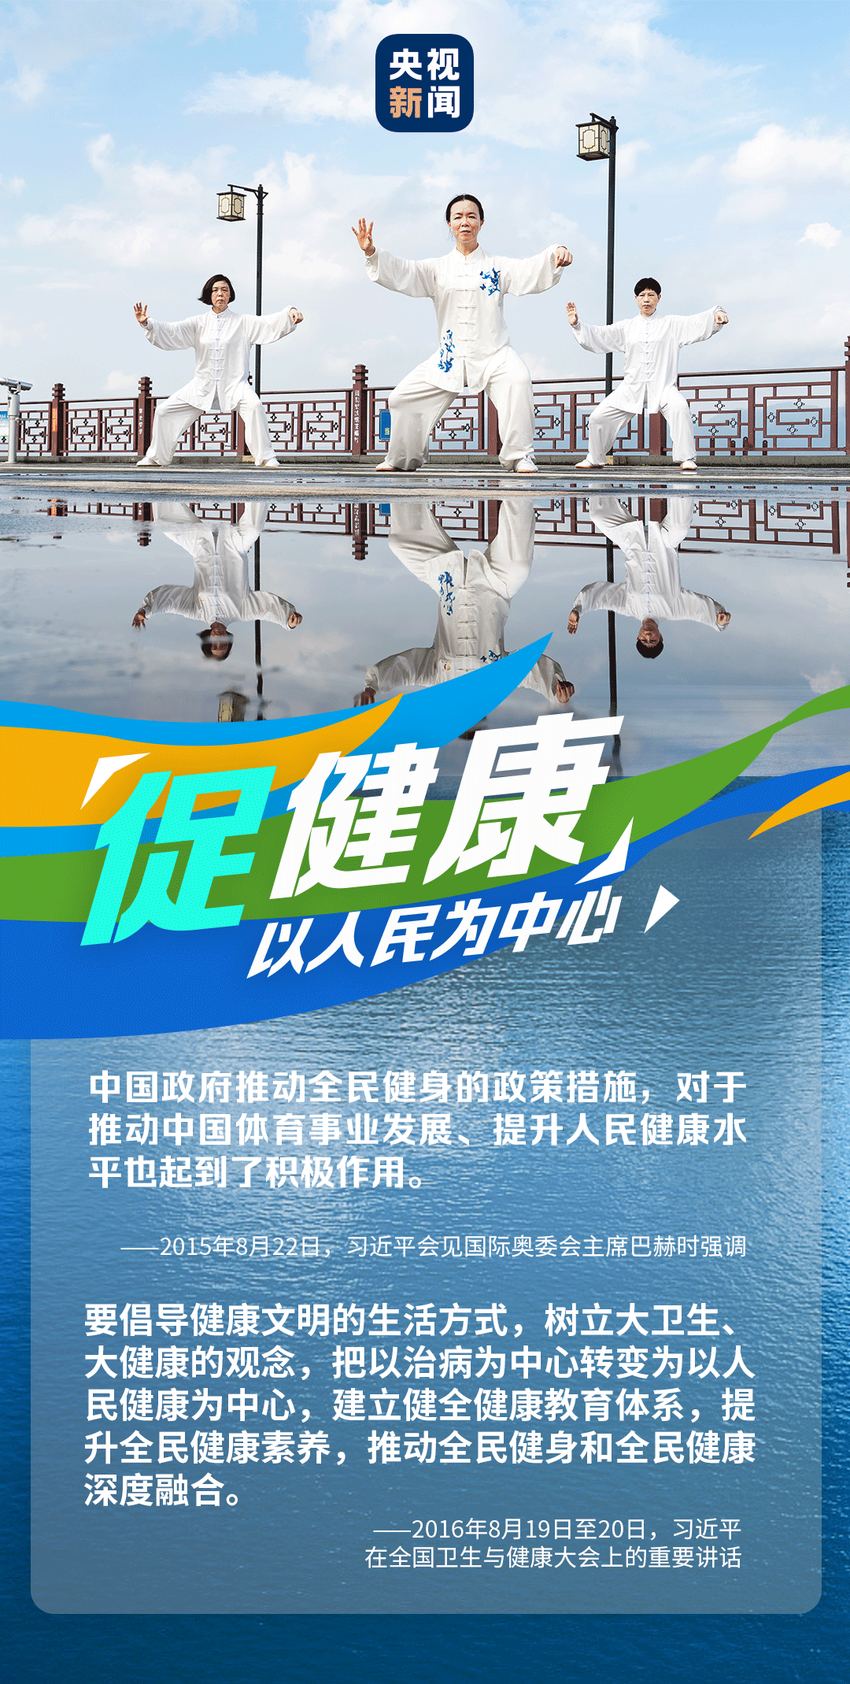 Hari Olahraga Nasional, Xi Jinping Serukan Masyarakat Rajin Berolahraga demi Rajin Bekerja_fororder_kc2